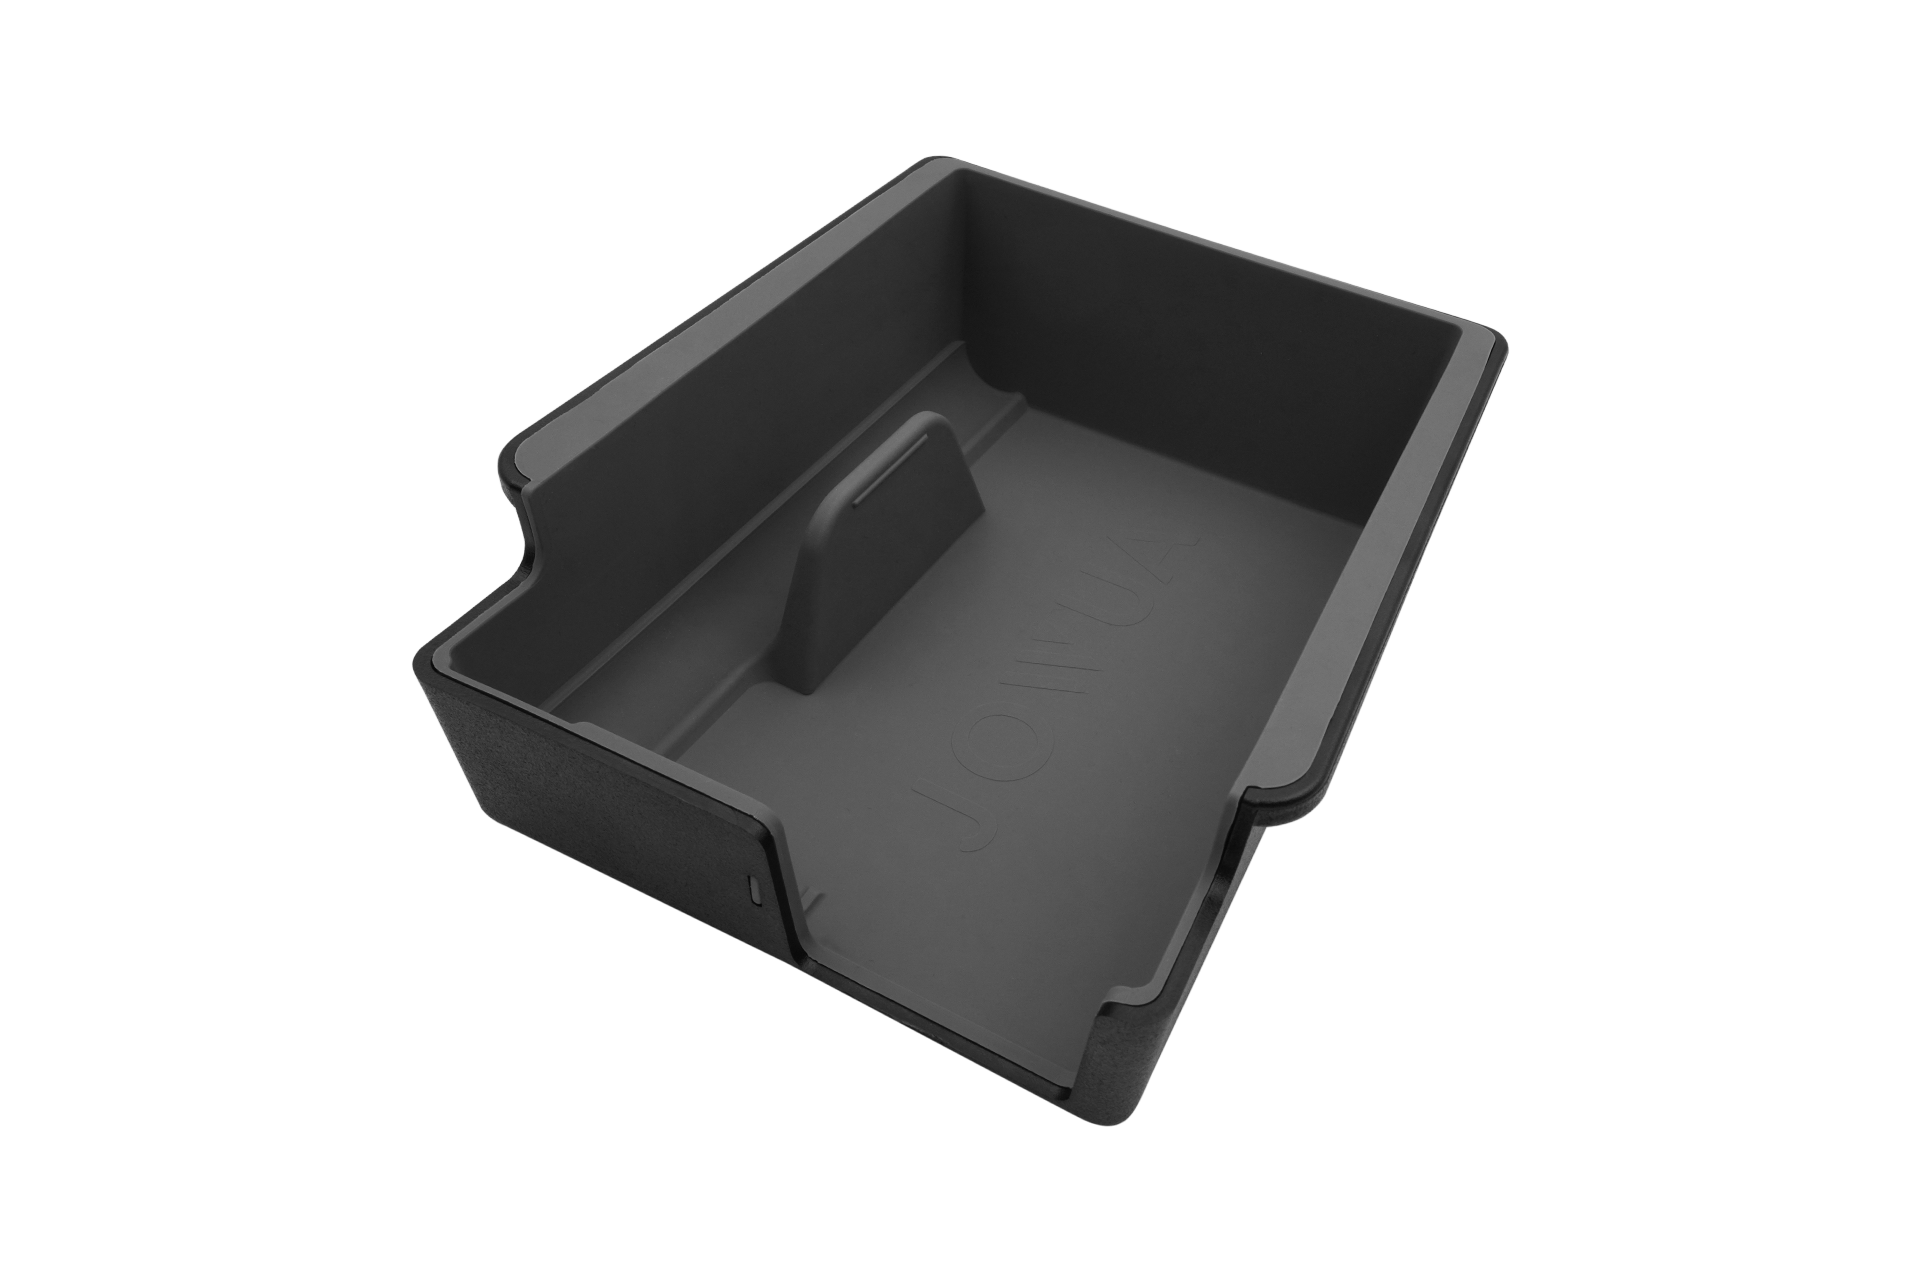 For New Tesla Model 3 2024 Highland Center Console Armrest Storage Organizer  Central storage Box PC